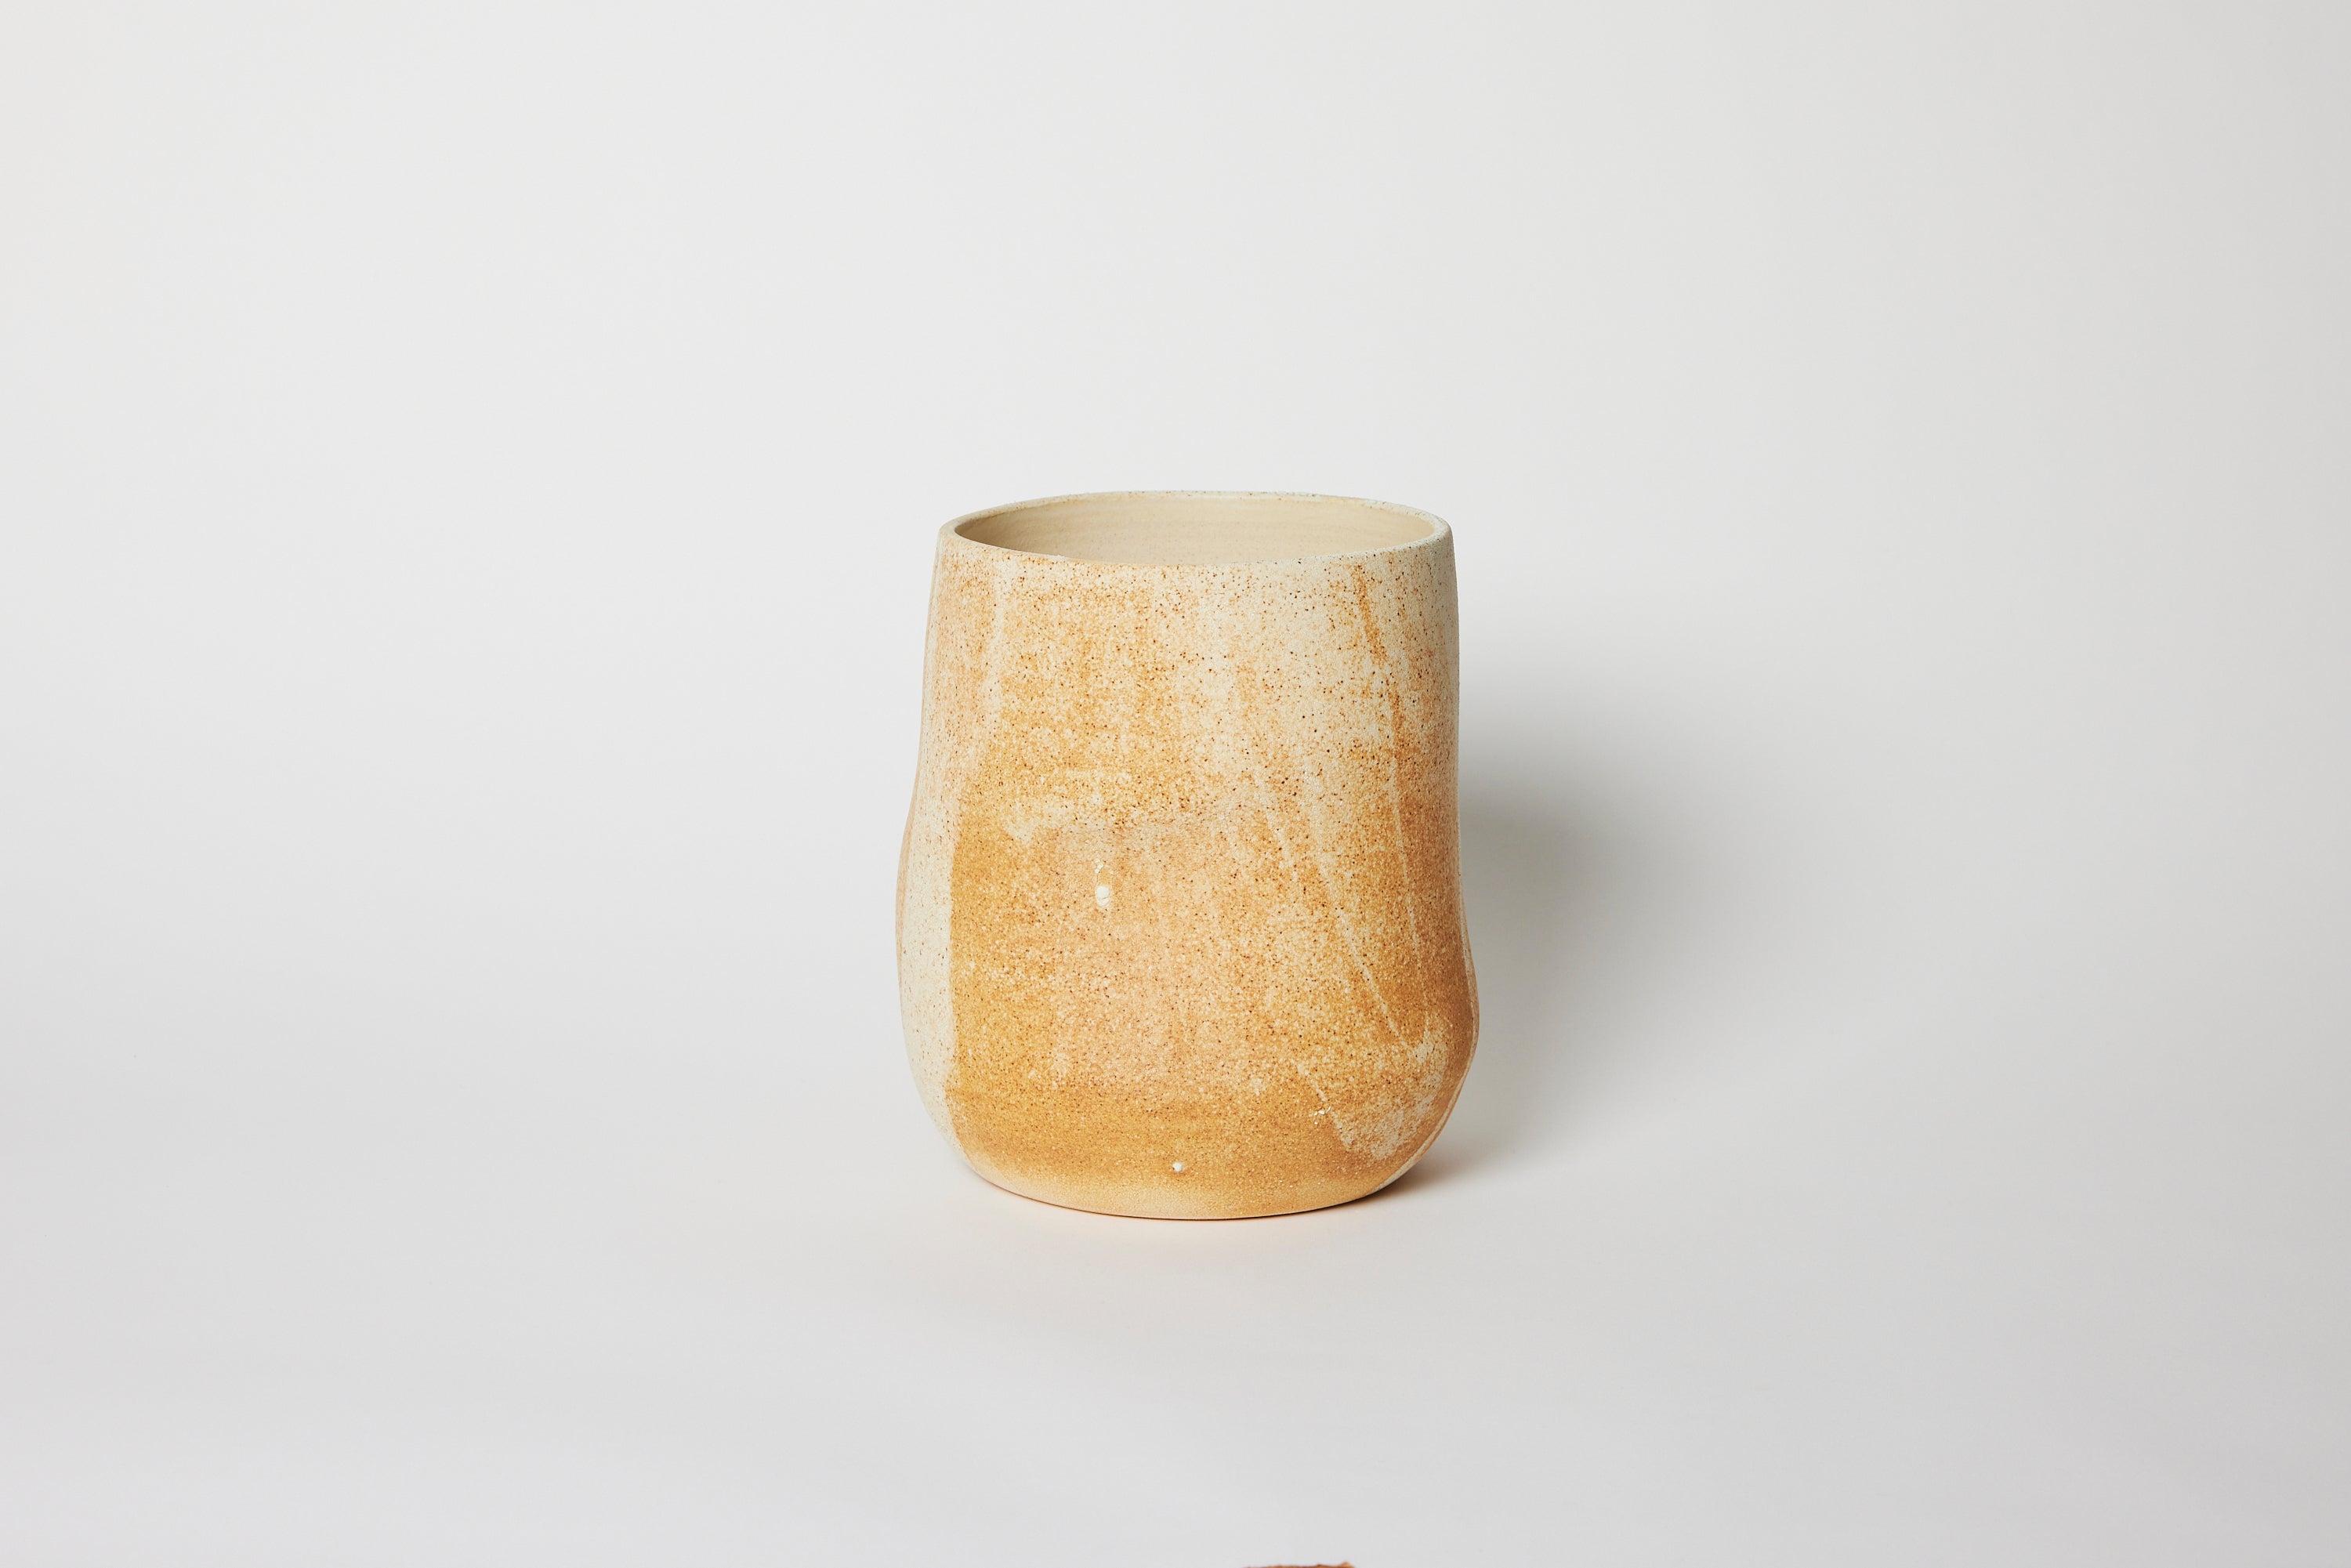 Sandstone Vase No. 1